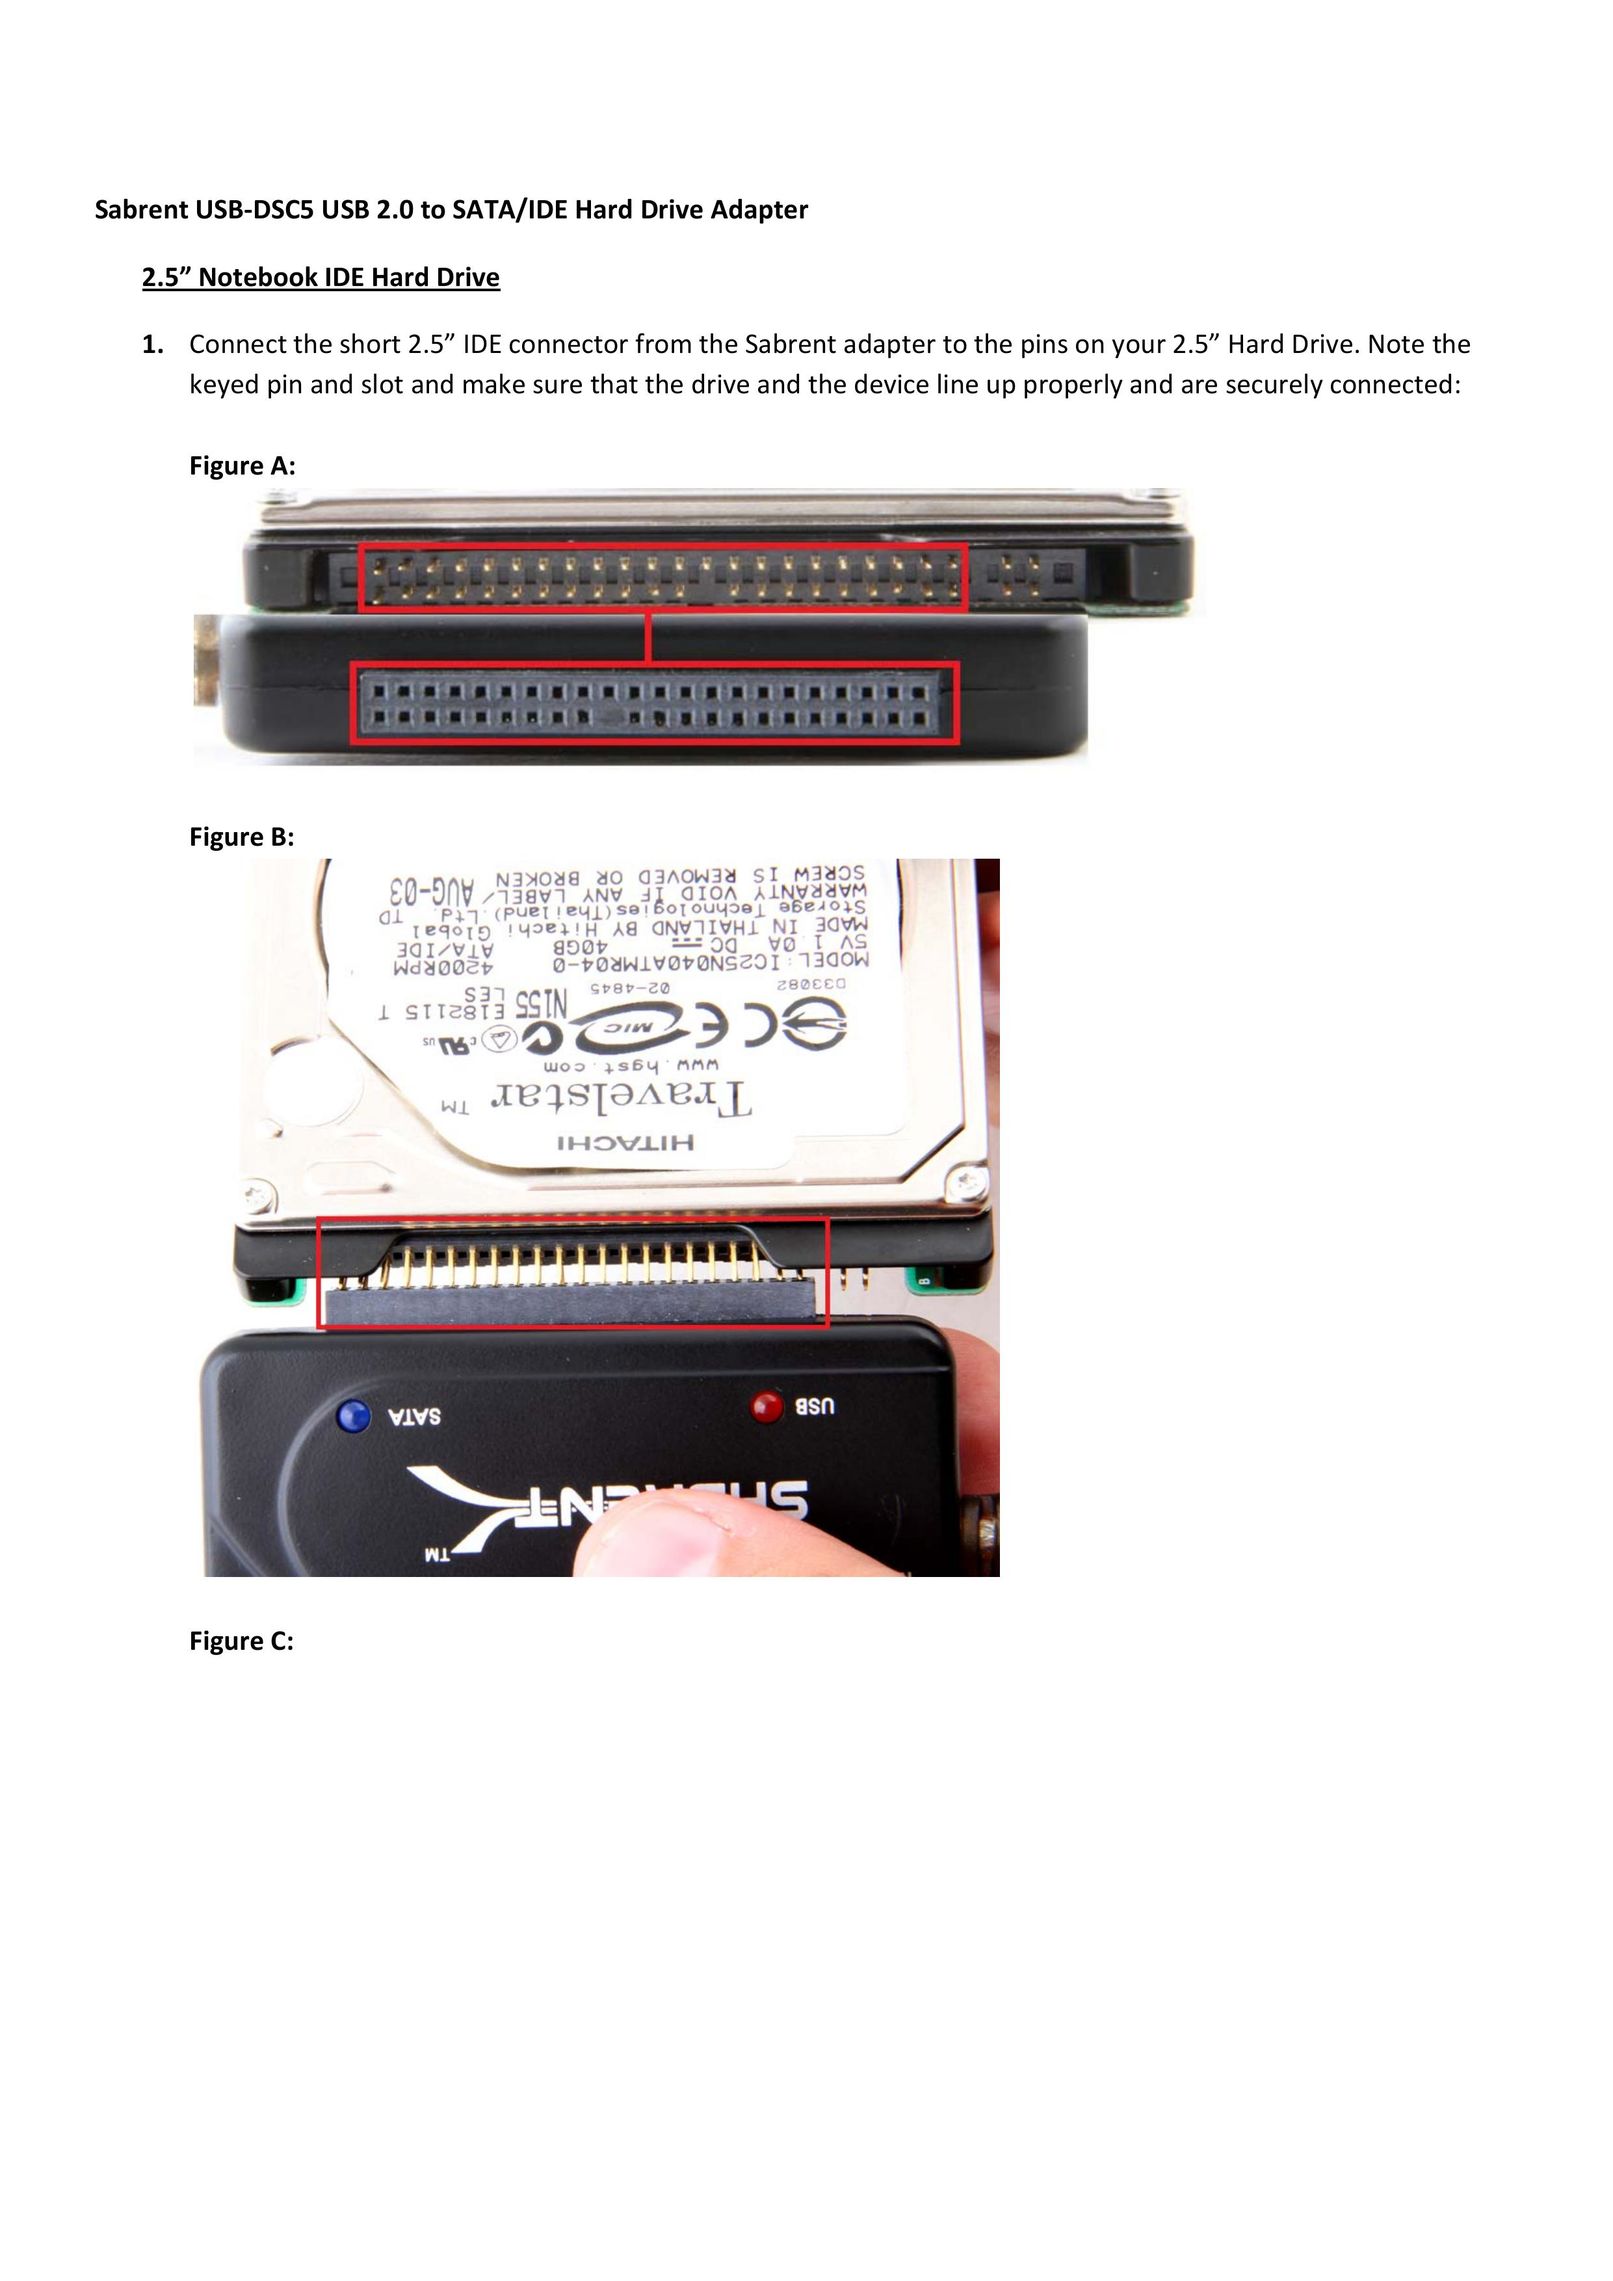 Sabrent USBDSC5 Computer Drive User Manual